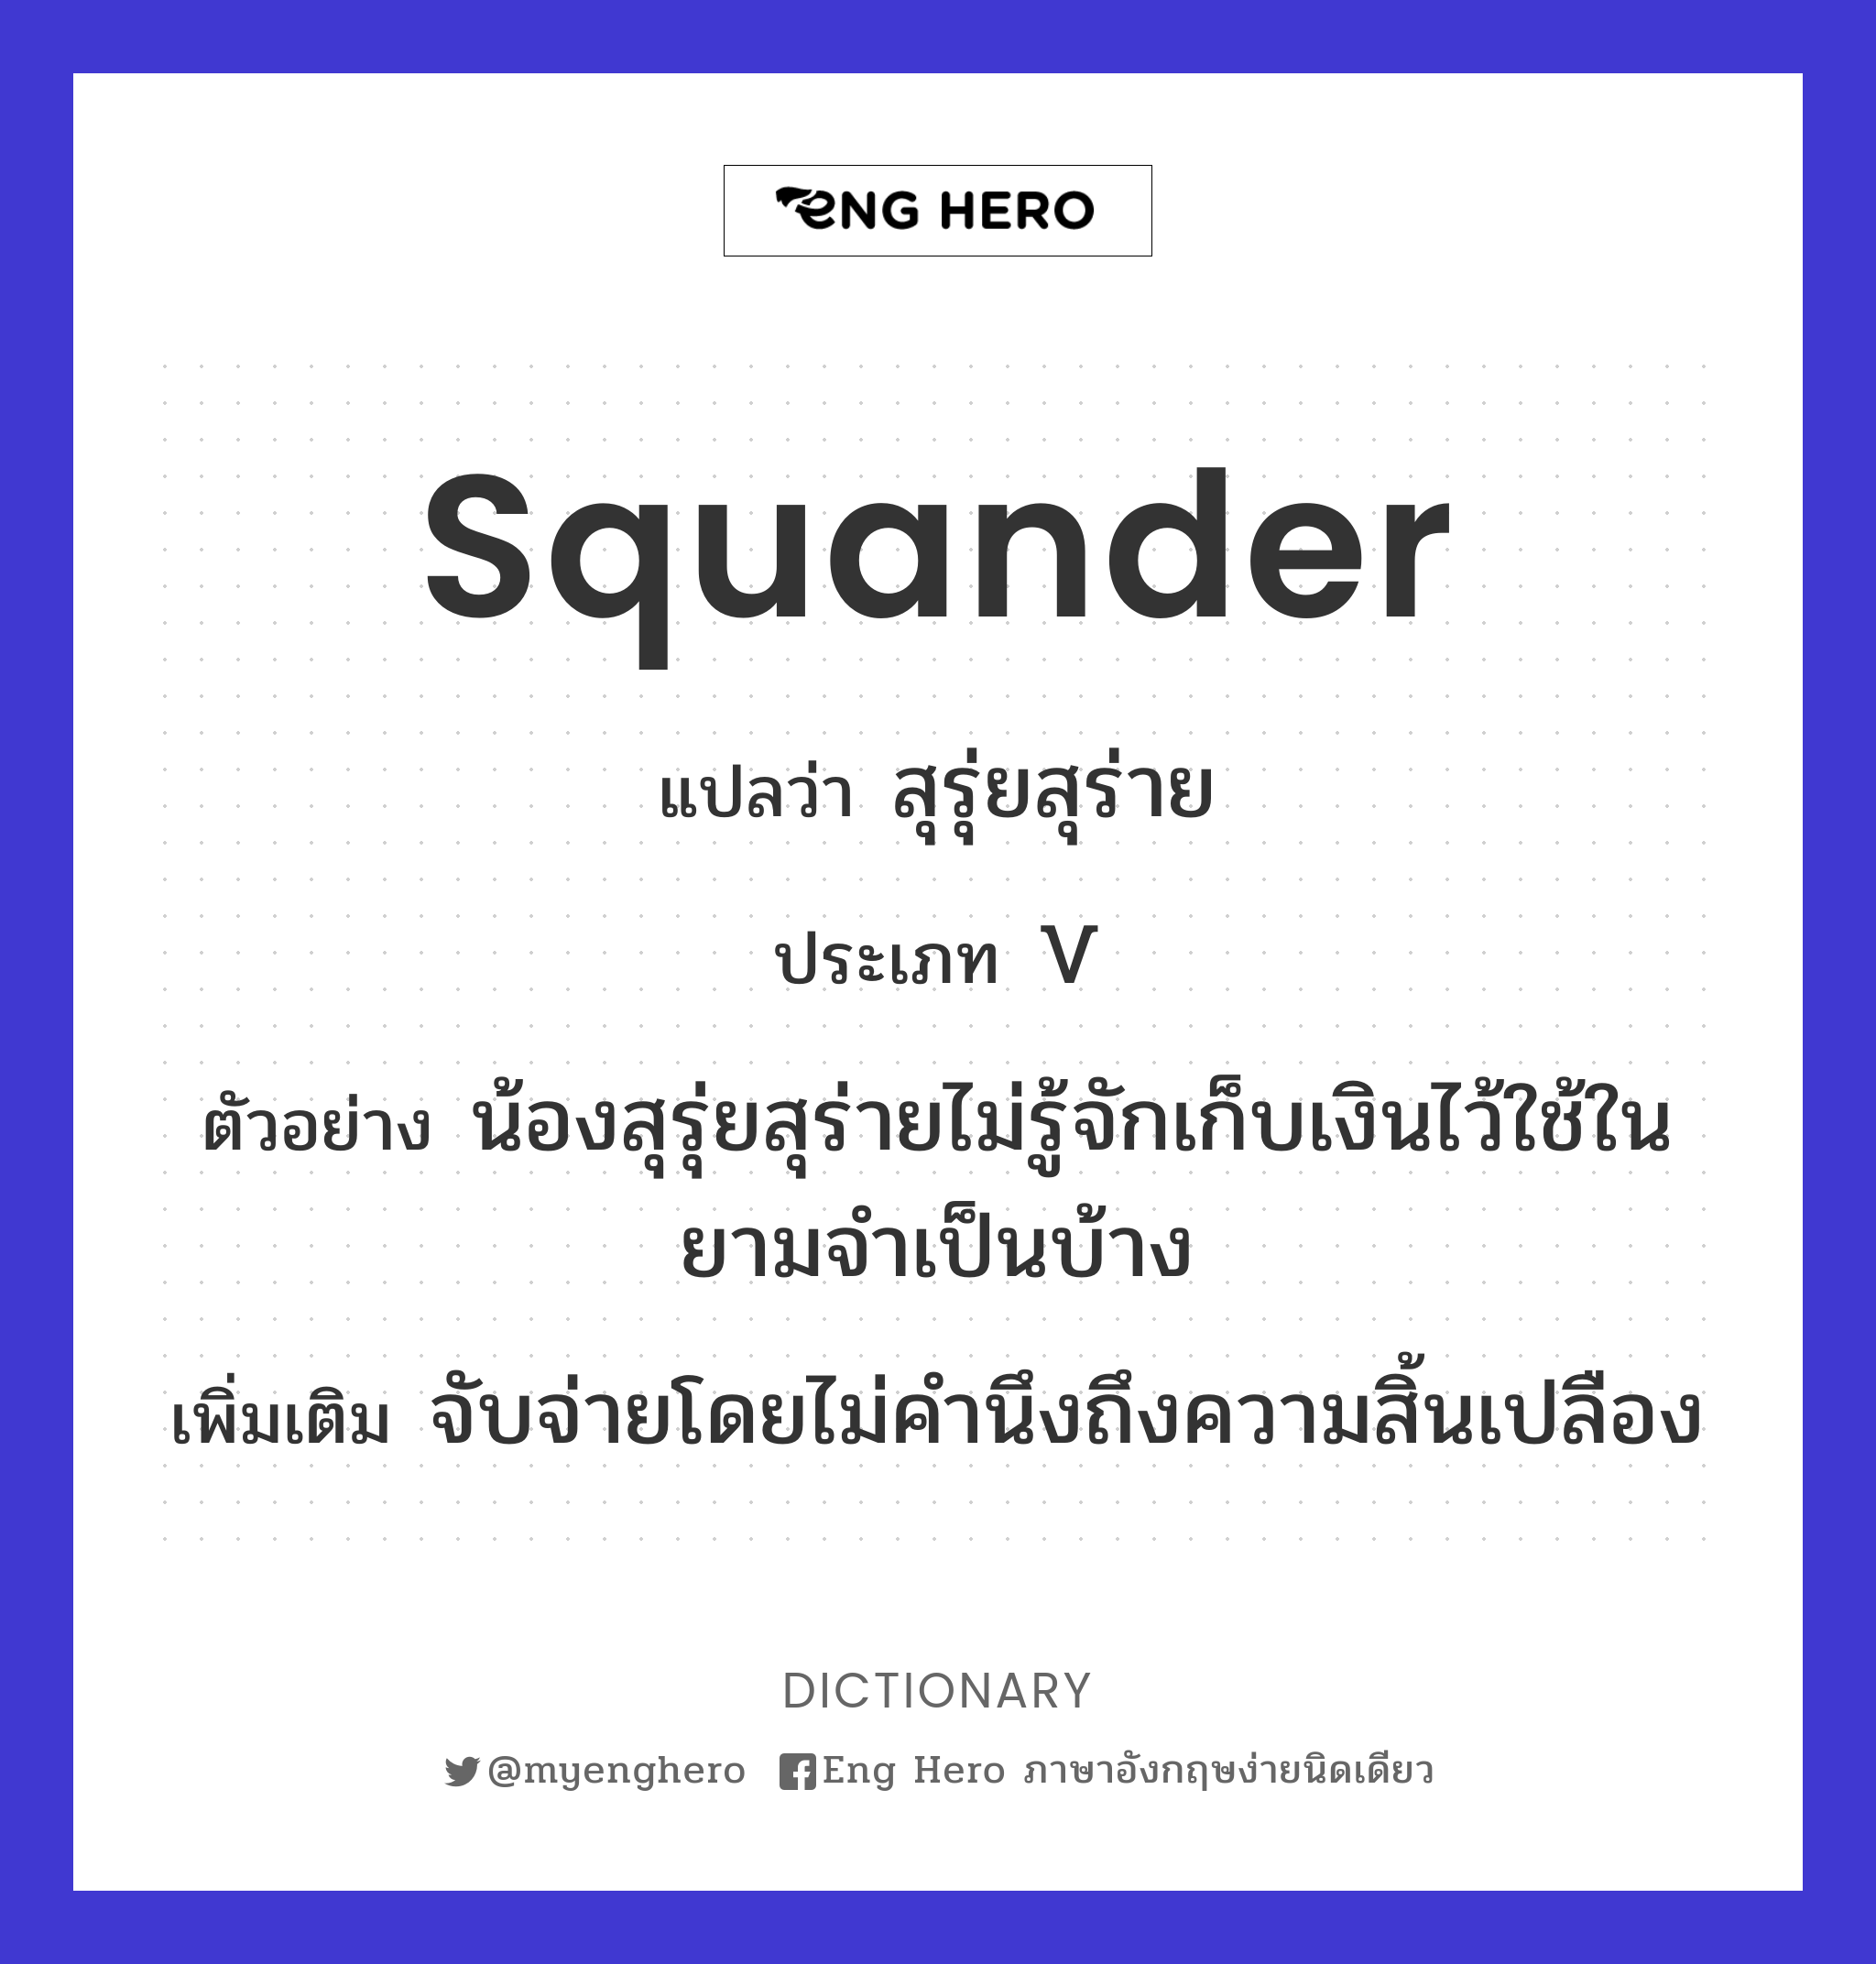 squander